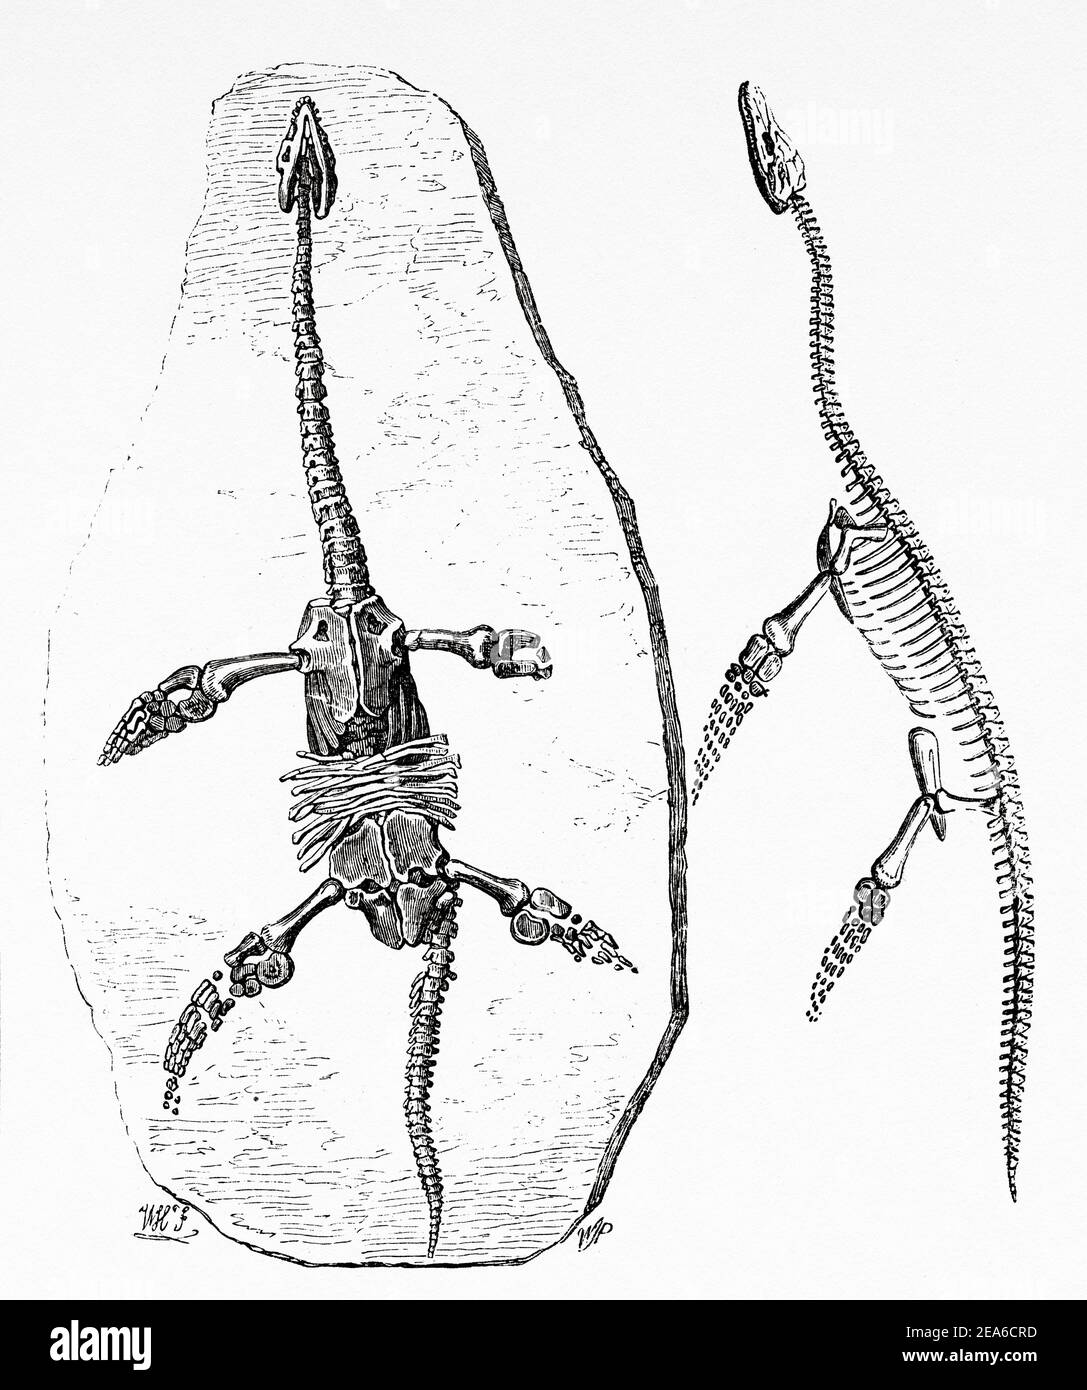 Old Nineteenth century illustration. Plesiosaurus dolichodeirus. Skeleton of a Plesiosaurus a genus of extinct large marine sauropterygian reptile. Old 19th century engraved illustration from El Mundo Ilustrado 1879 Stock Photo